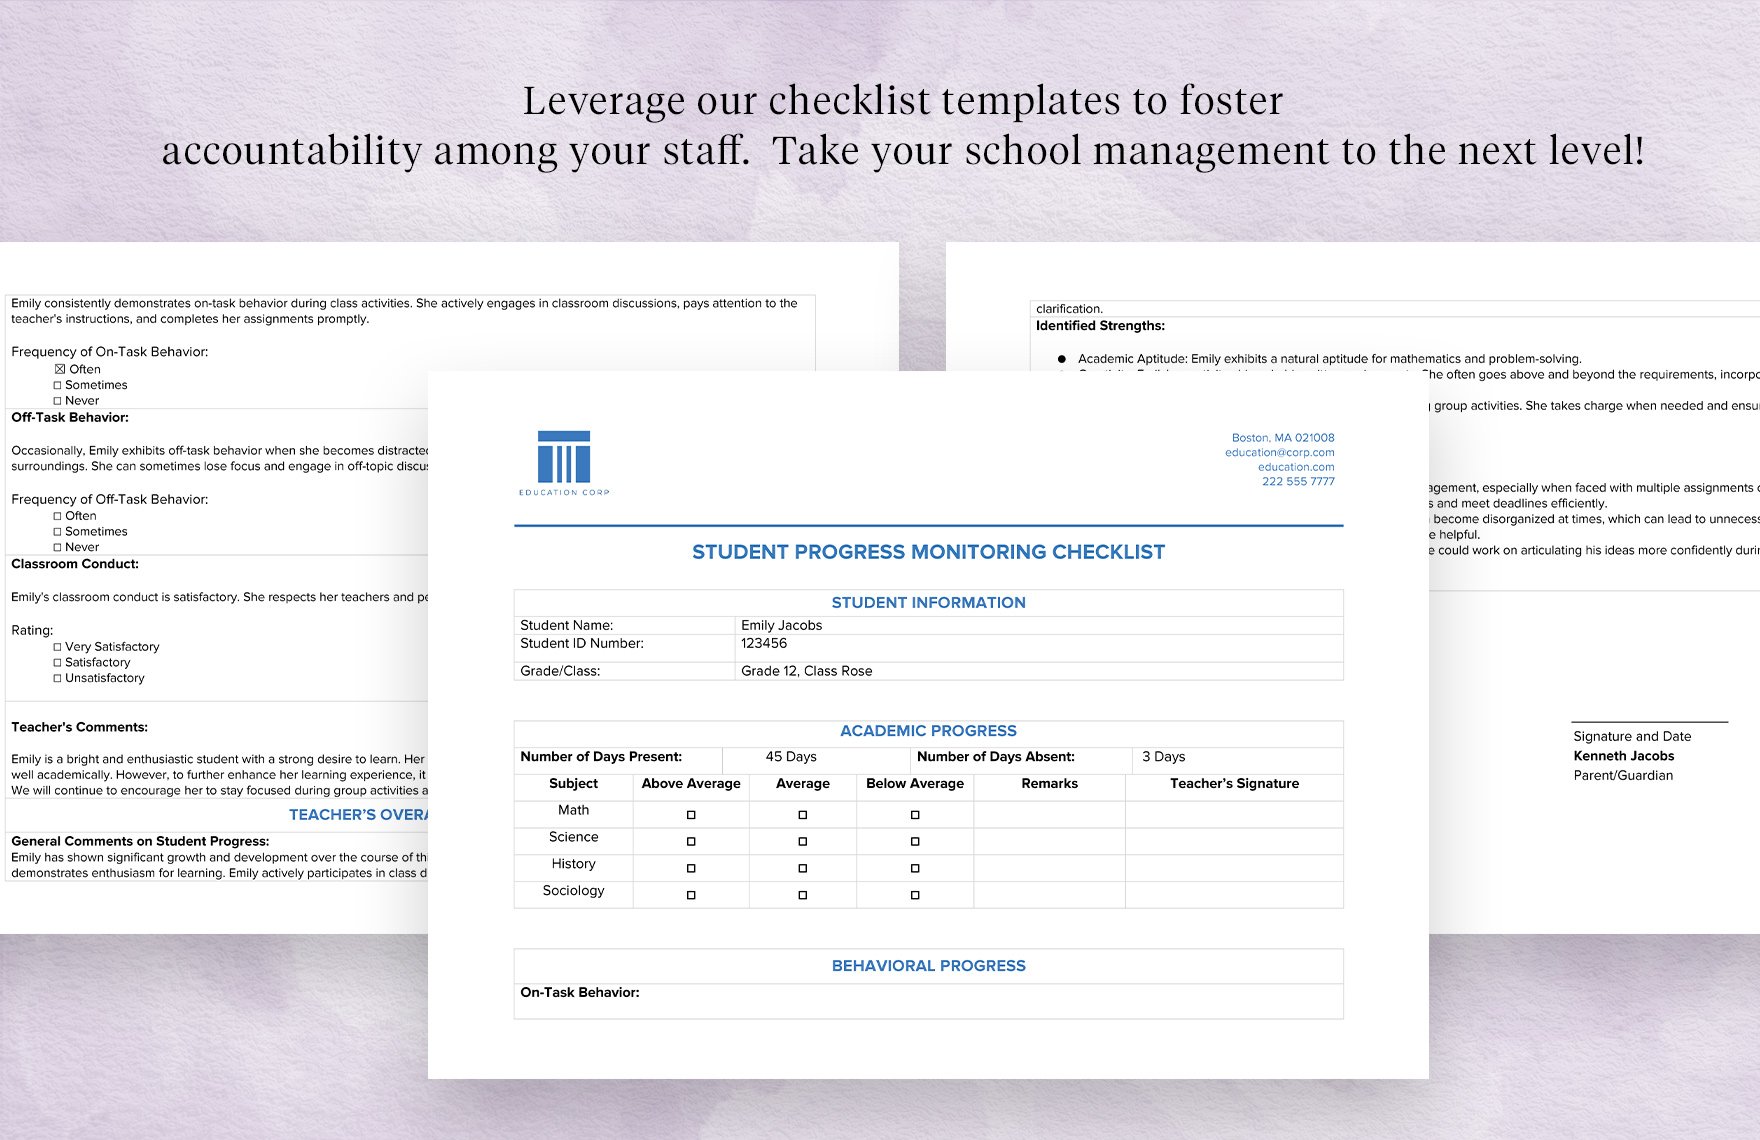 Student Progress Monitoring Checklist Template